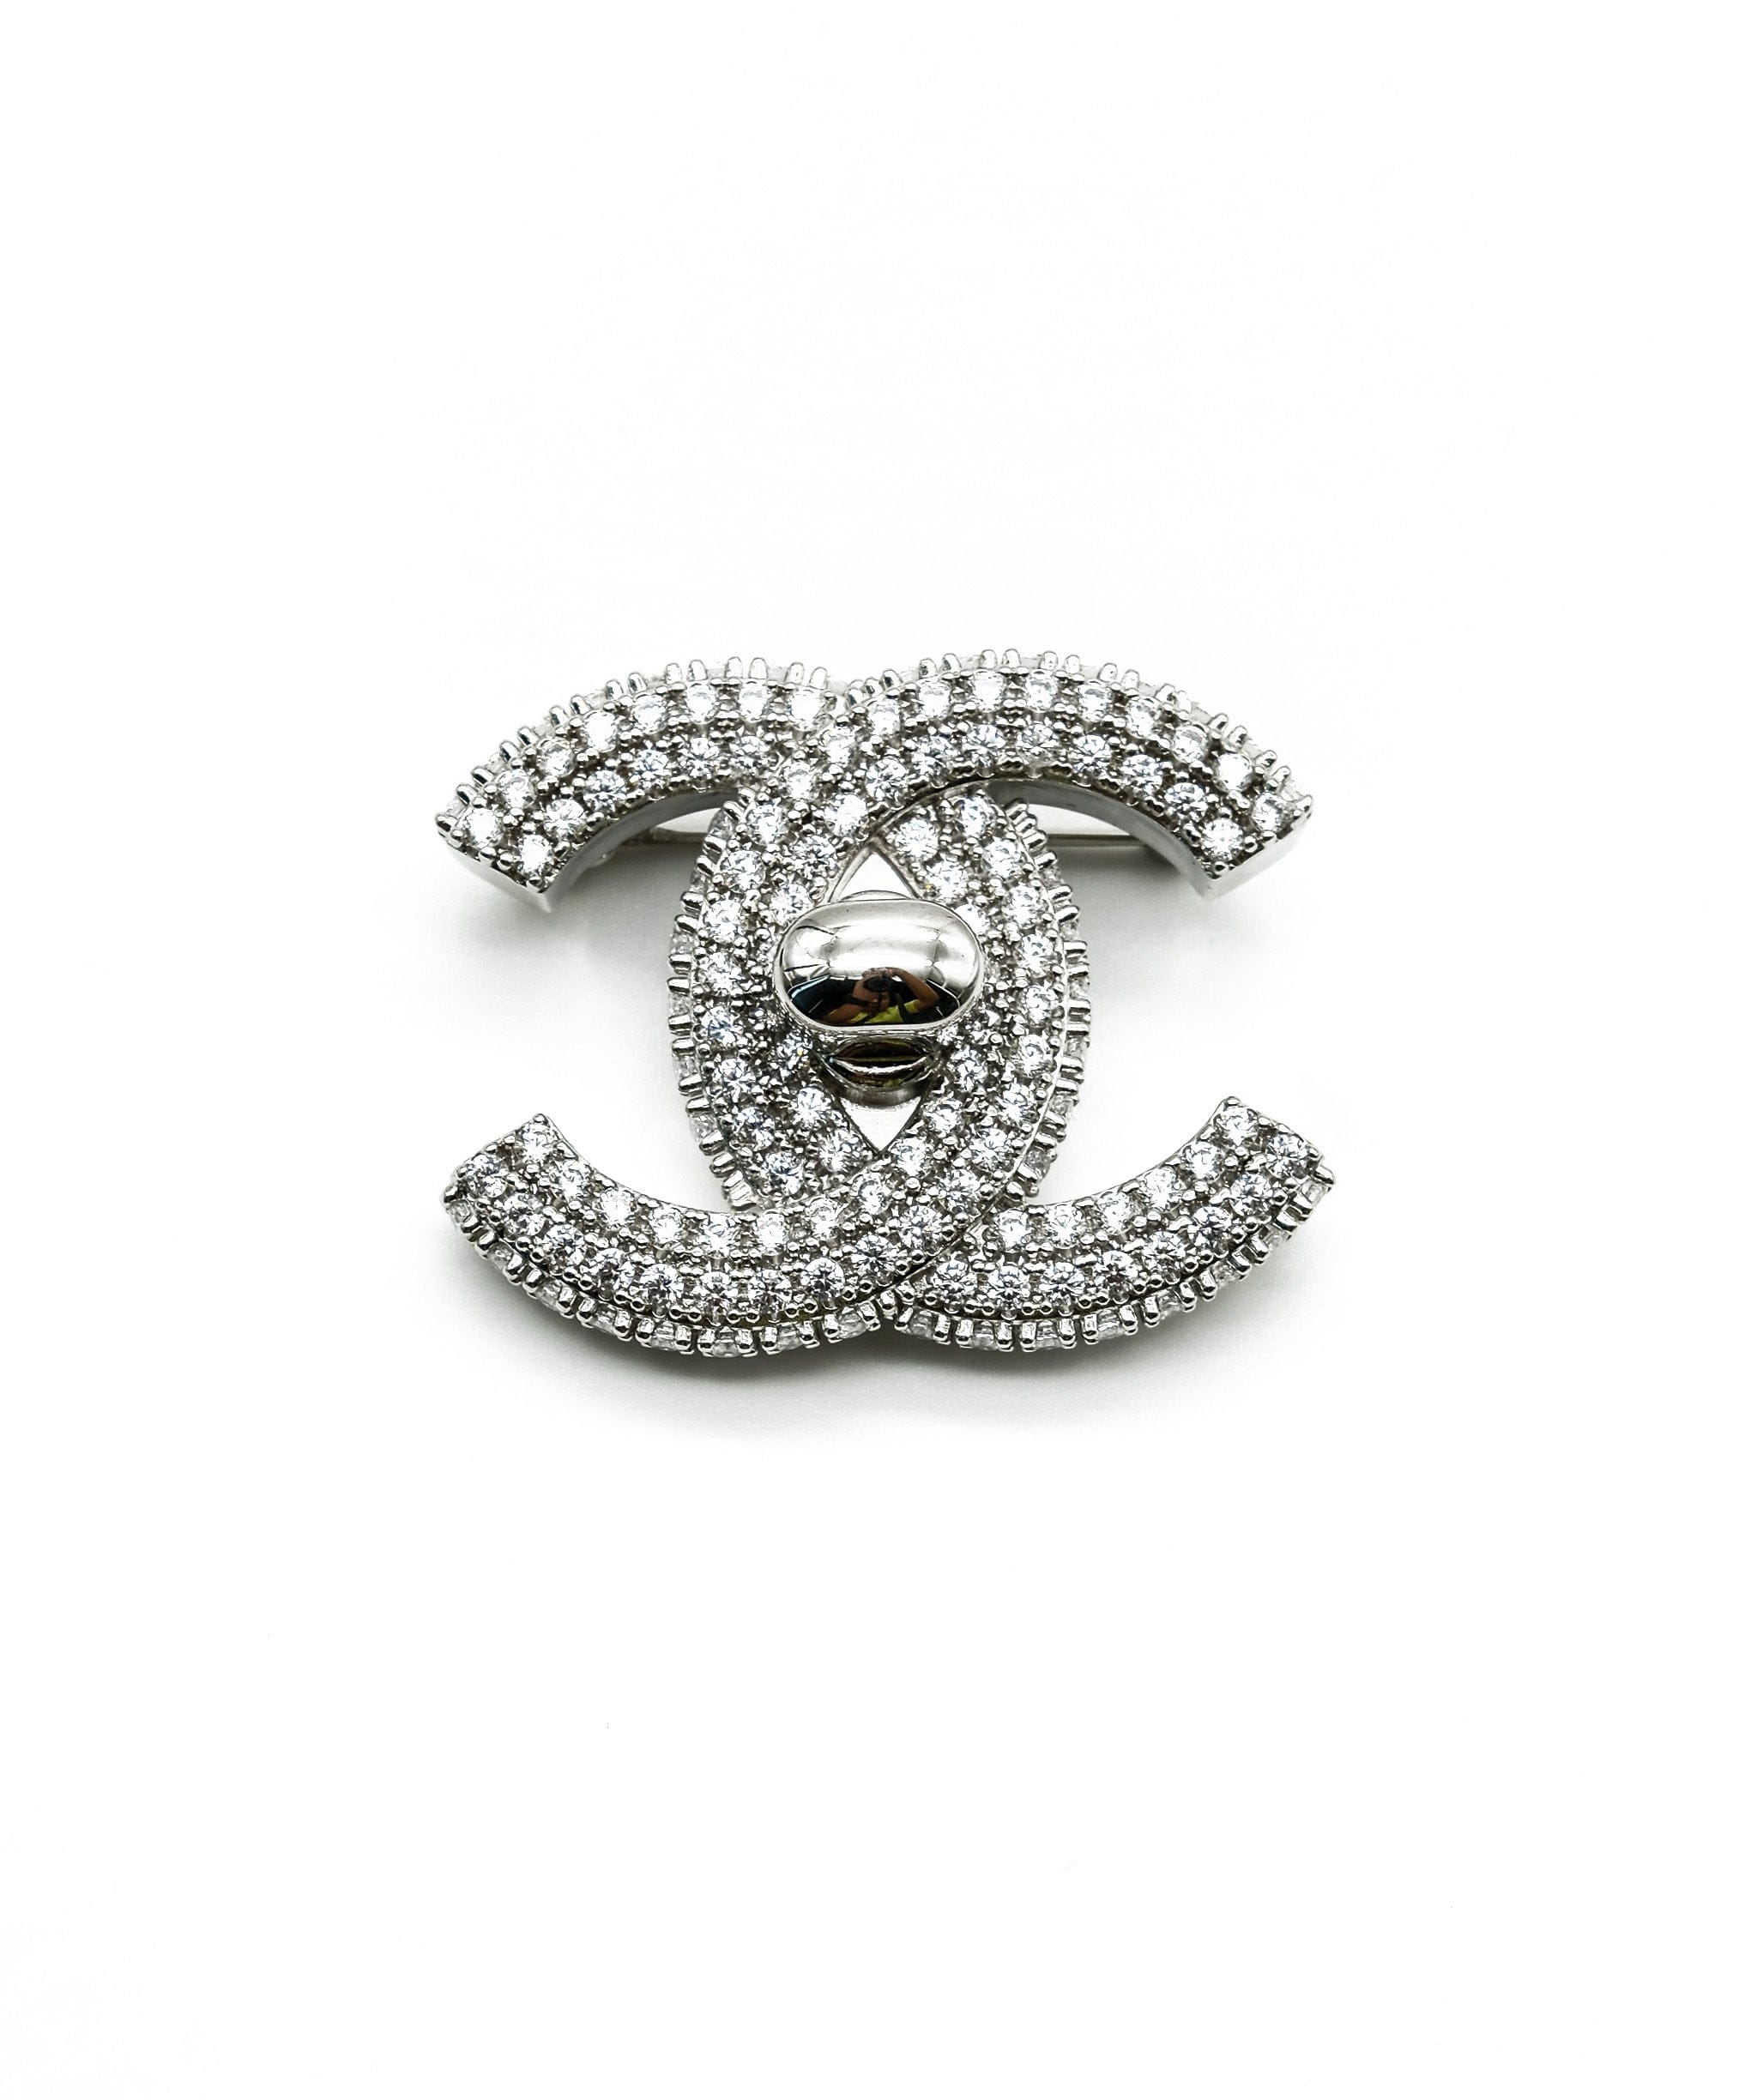 Chanel Chanel Crystal Turnlock Brooch RJC1583